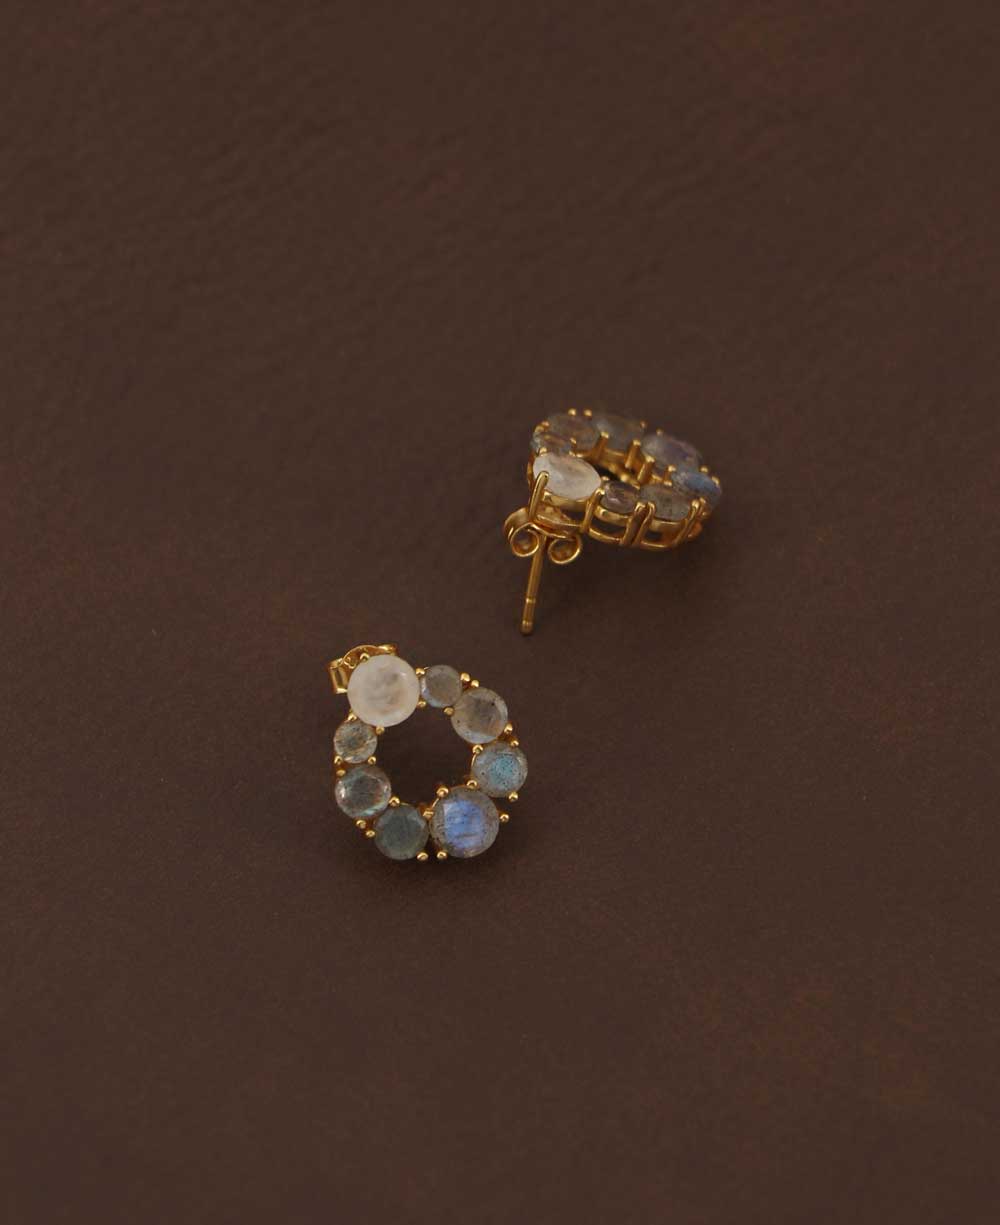 Gold Plated Labradorite Stud Earrings with Rainbow Moonstone - Earrings